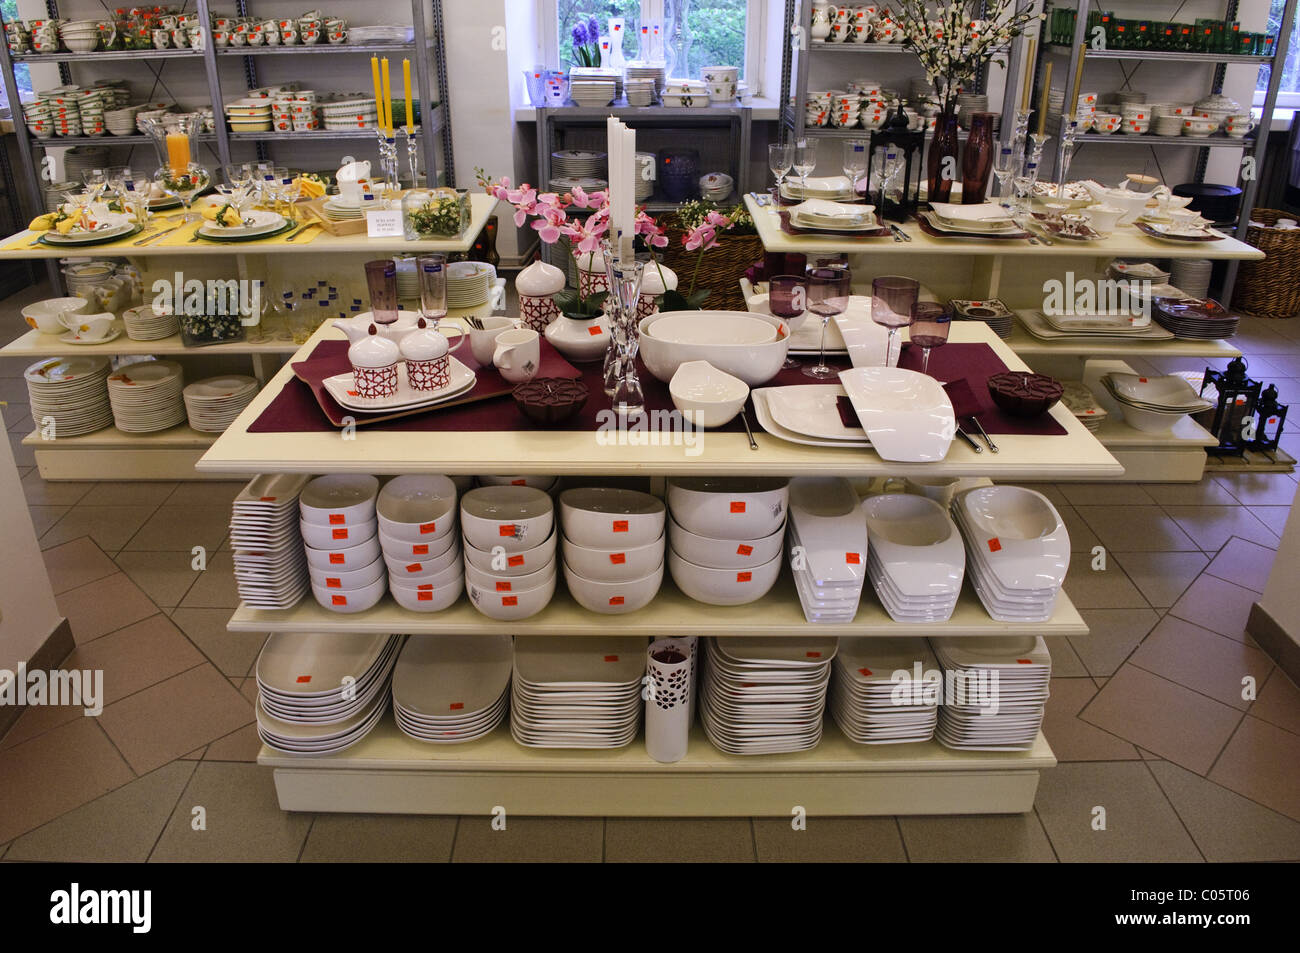 verantwoordelijkheid Afleiden bewaker Villeroy & Boch china shop factory outlet at Wadgassen, Germany Stock Photo  - Alamy